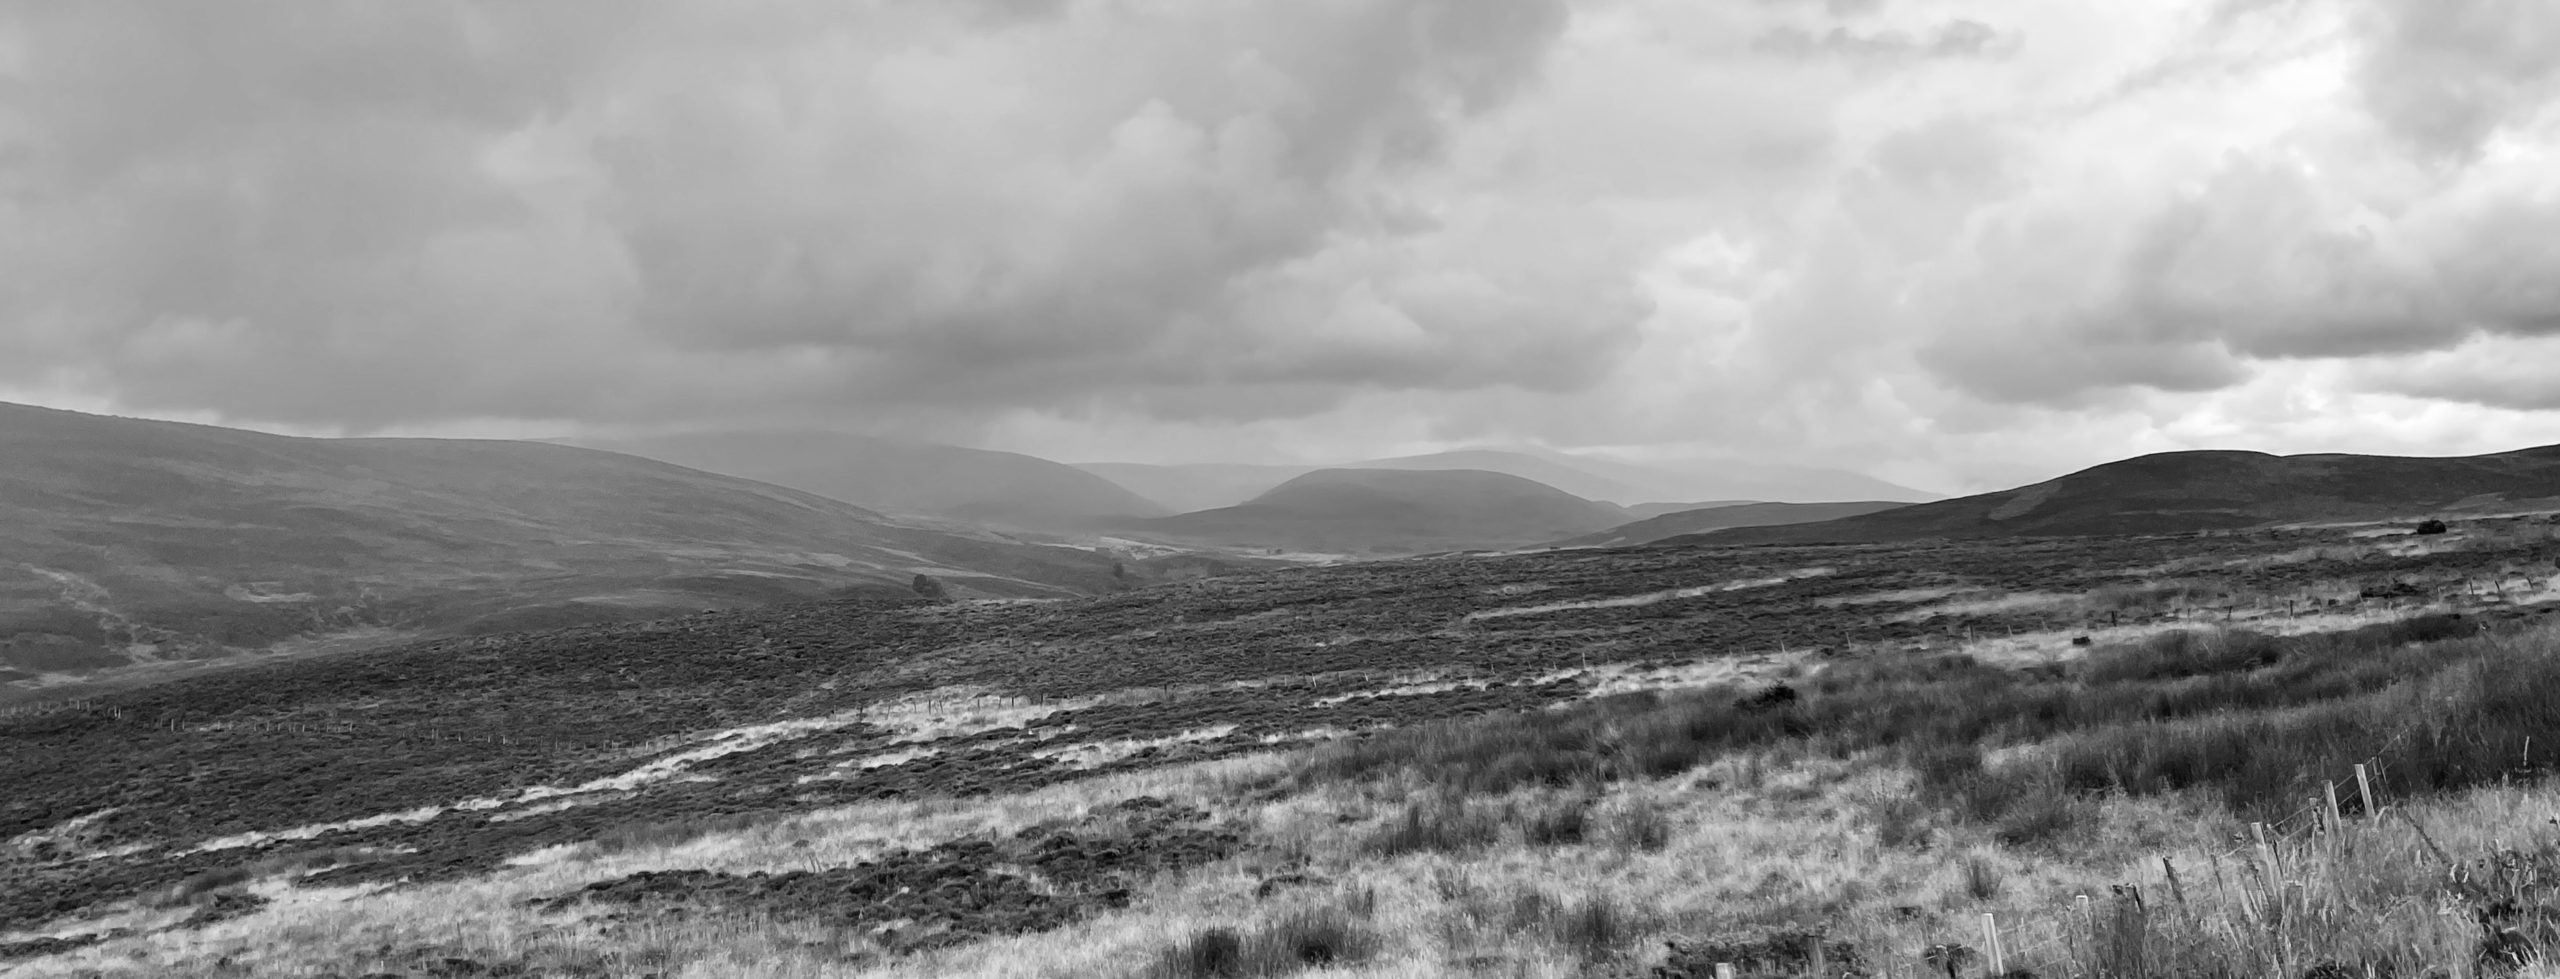 Cairngorm National Park